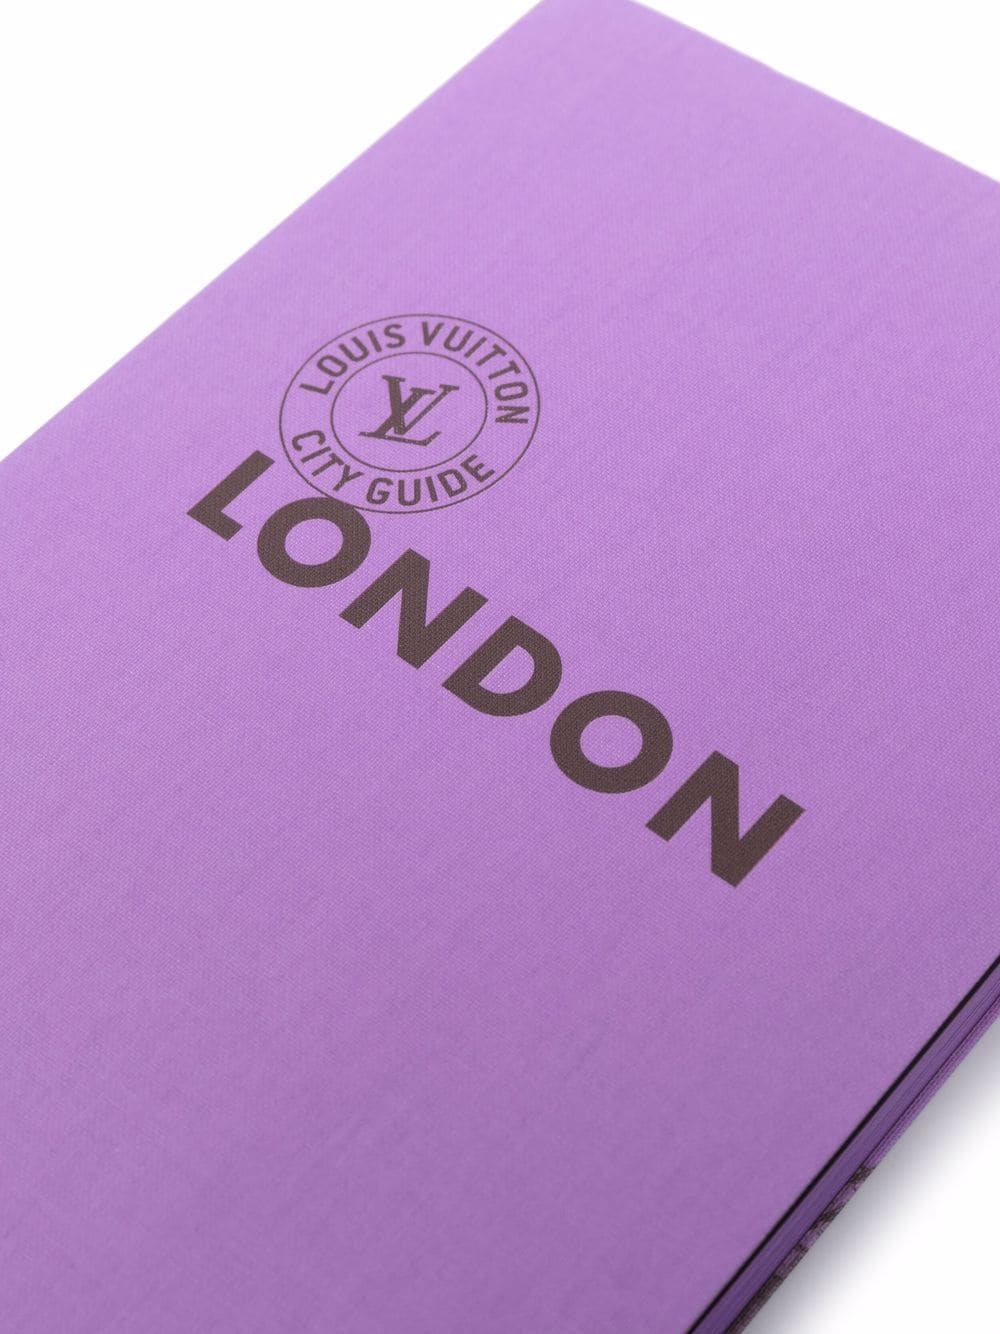 Louis Vuitton London City